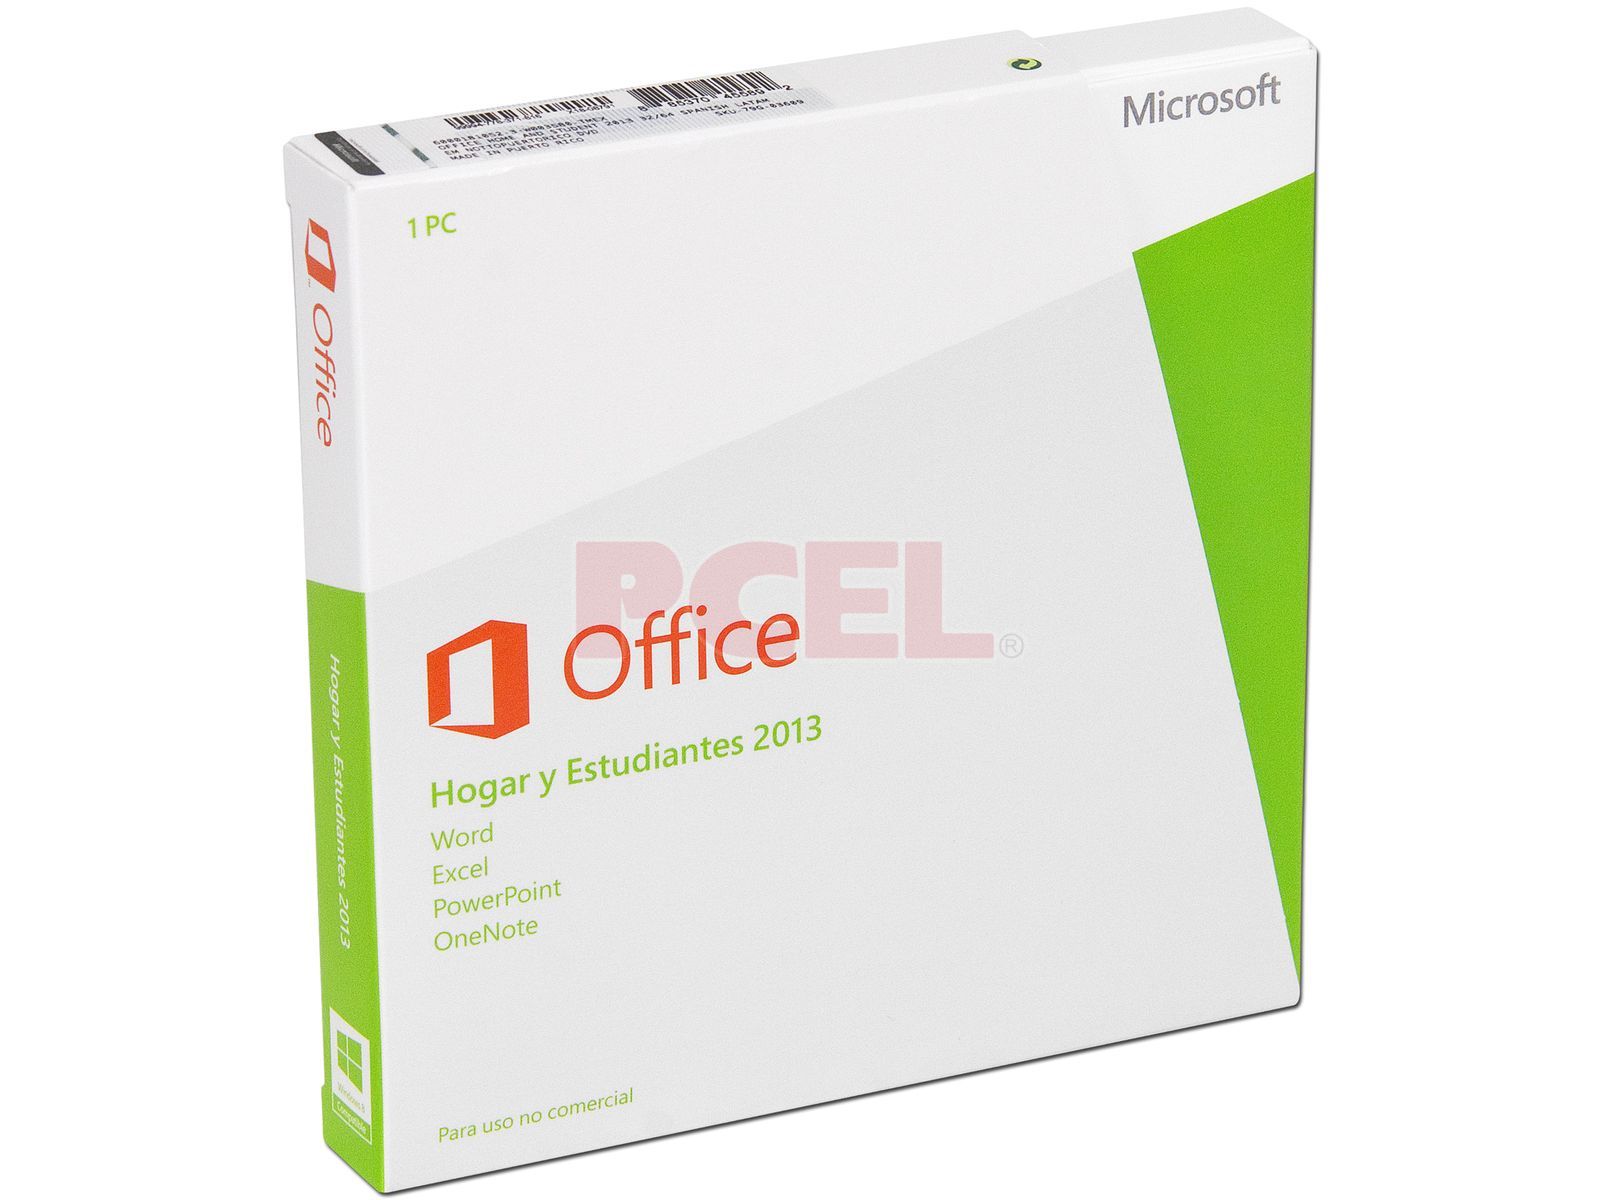 Microsoft Office Hogar y Estudiantes 2013 (1 PC).